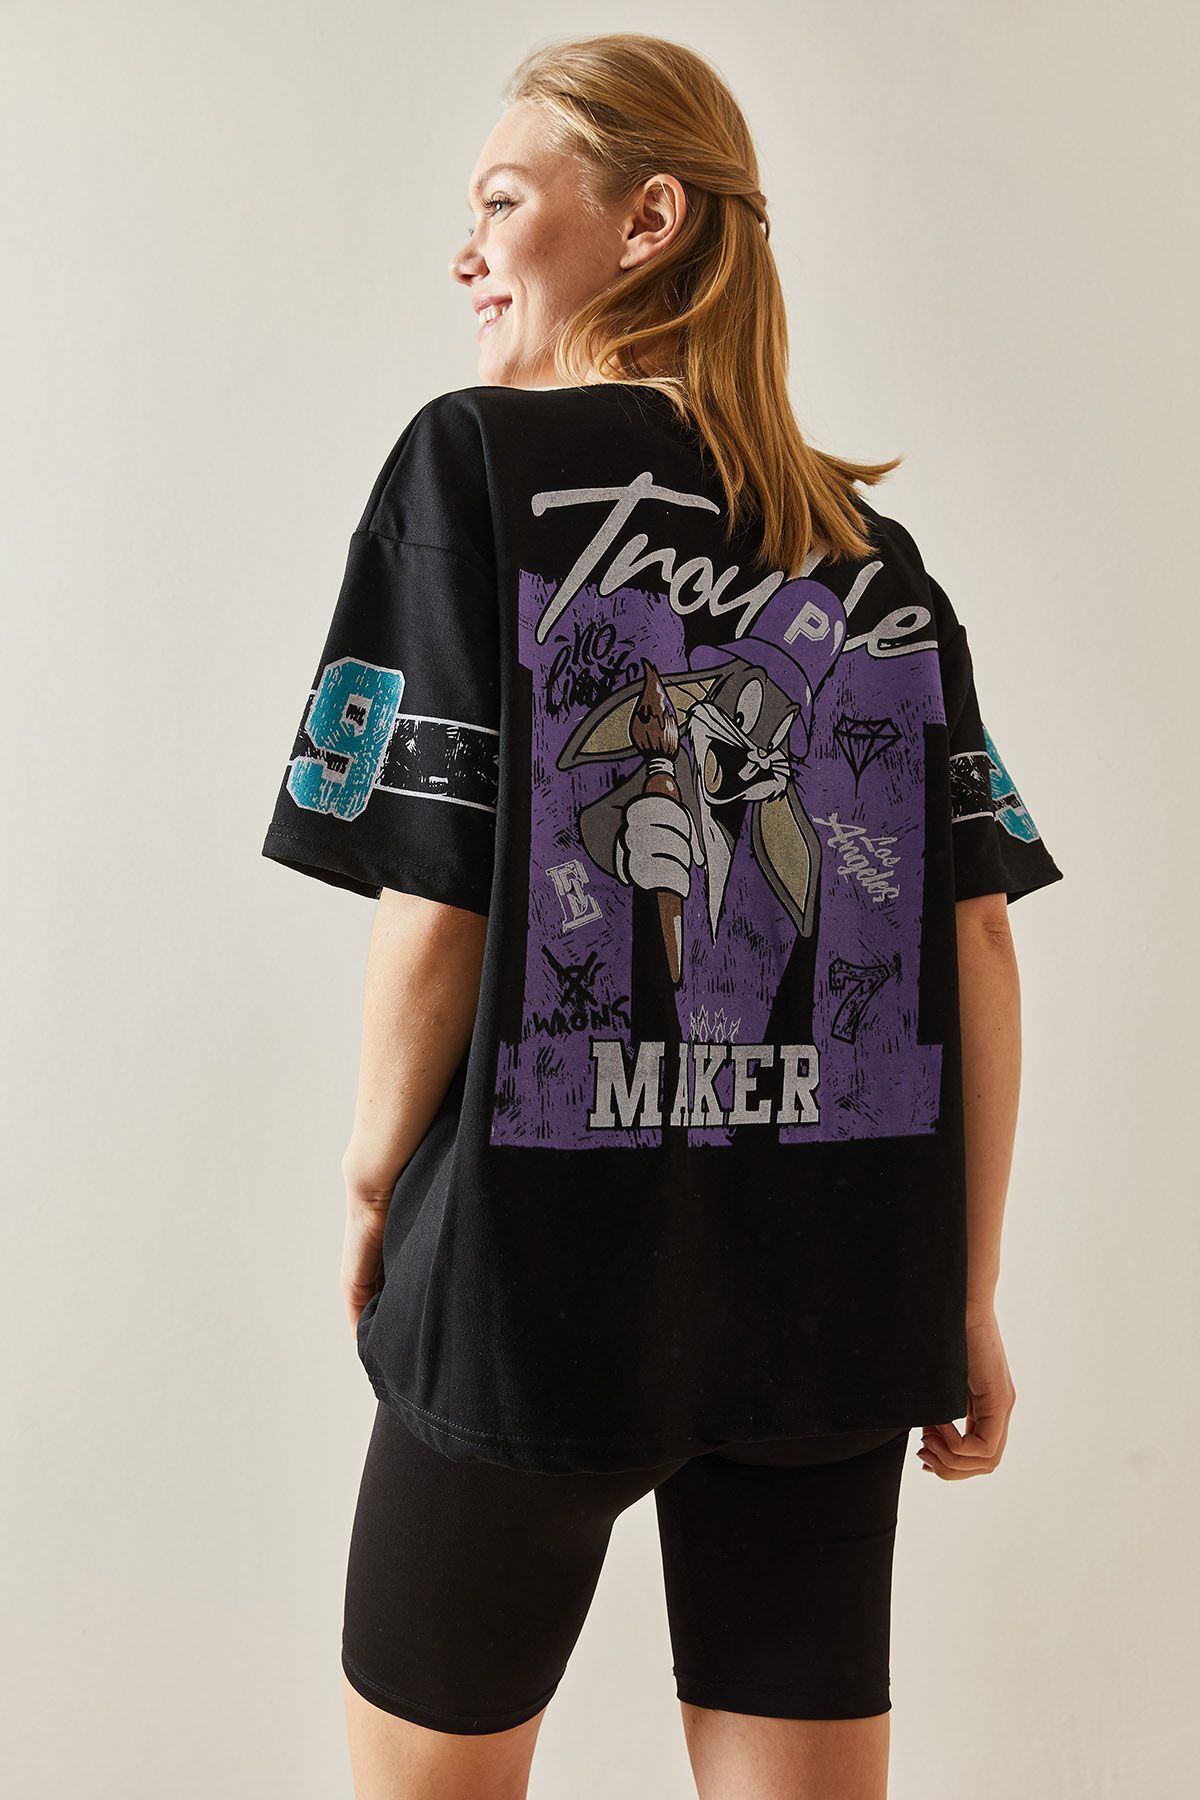 XHAN Black Crew Neck Back Printed Oversize T-Shirt 4KXK1-47898-02